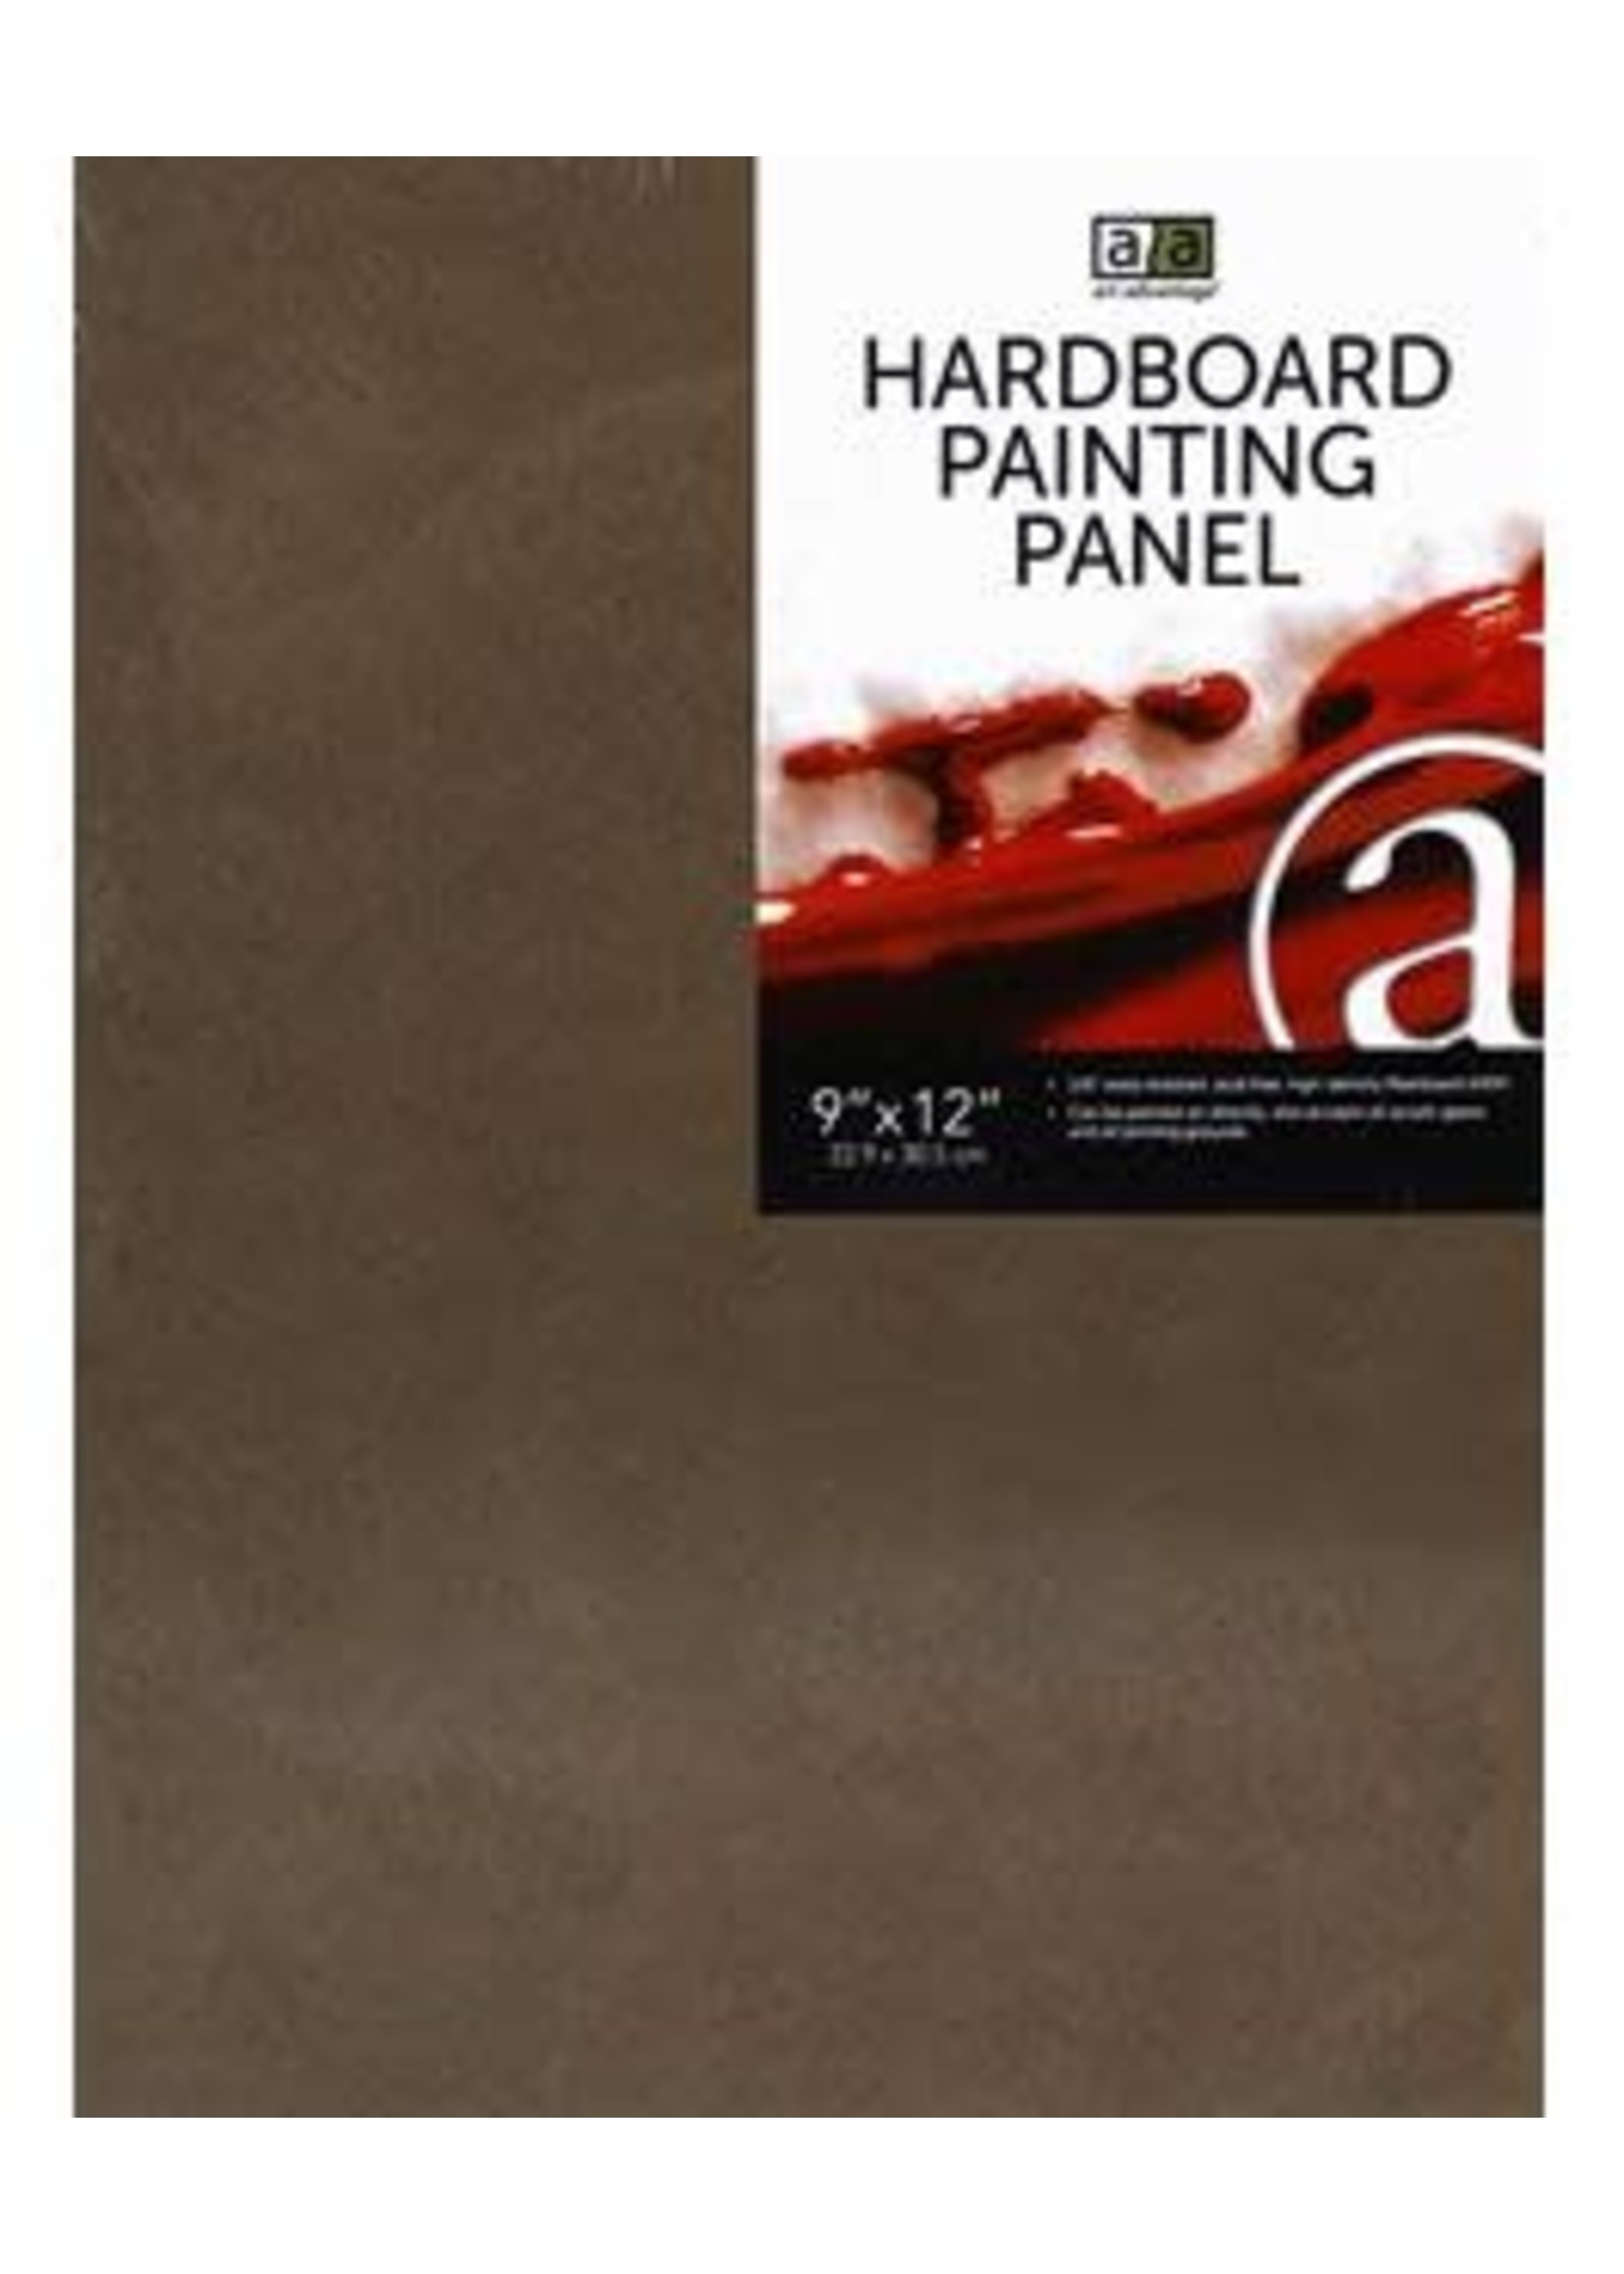 Art Advantage Hardboard Painting Panel 9x12"